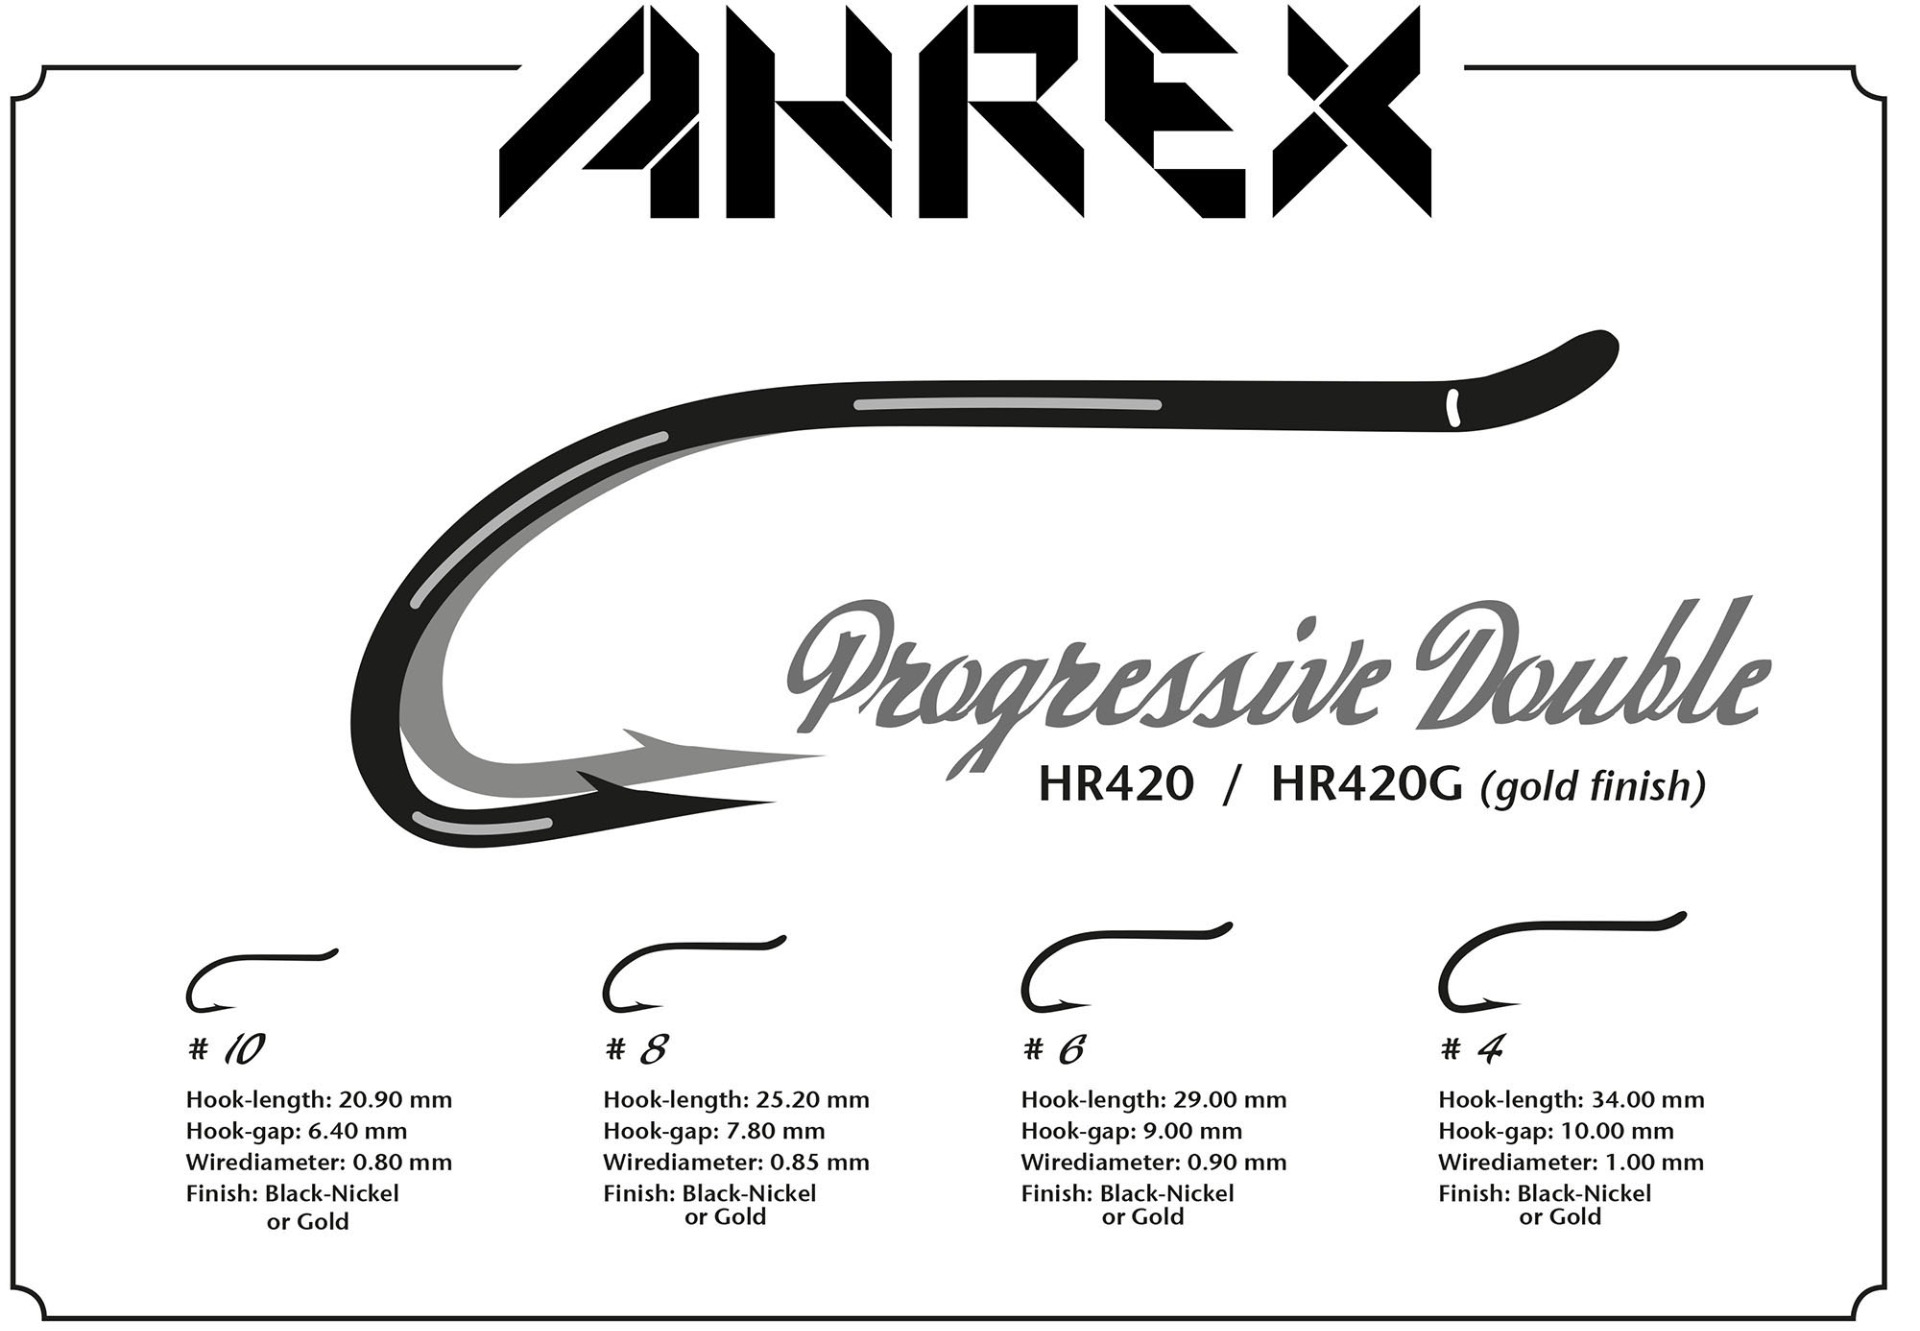 Ahrex Progressive Double Gold